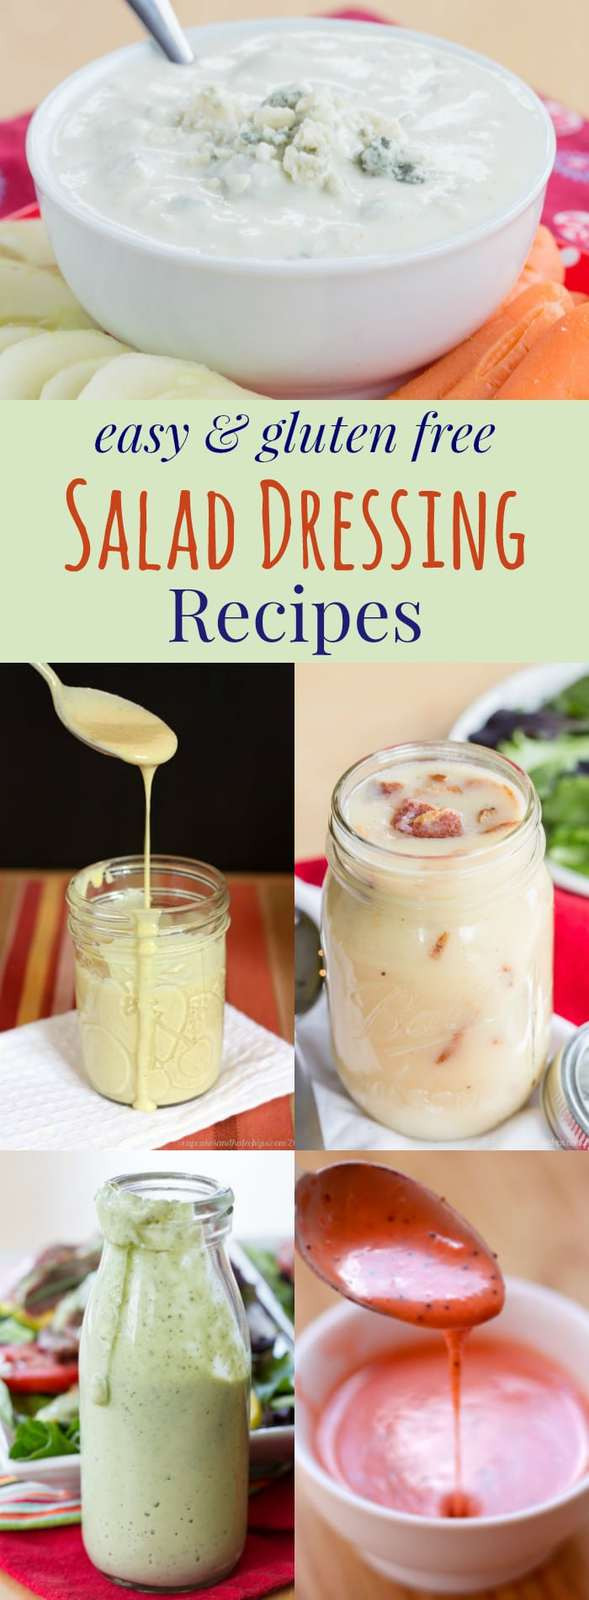 Salad Dressings Gluten Free
 Easy Gluten Free Salad Dressing Recipes Cupcakes & Kale